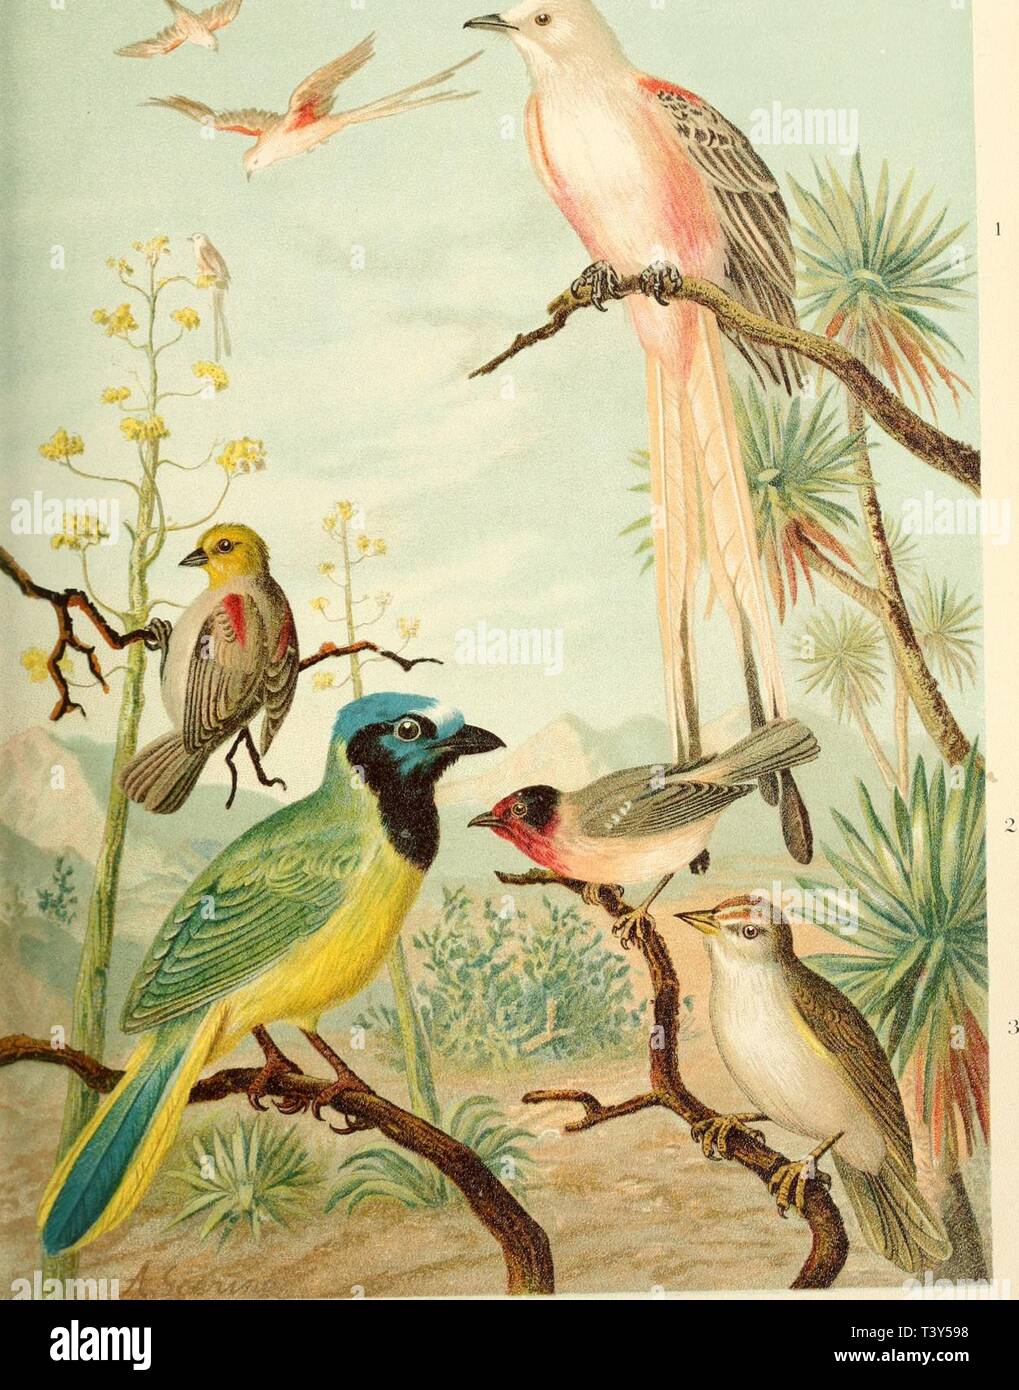 Image d'archive à partir de la page 316 de Die Nord-Amerikanische Vogelwelt (1889). Die Nord-Amerikanische dienordamerikani Vogelwelt10nehr Année : 1889 MIIATLrS OlinCATUS Swams JE JE. Â 1. CARDKMJXA RUBRIFRÃ¼NS SclrU 3. KMRKHXAGRA RFKIVIKUATA l.av.'i- 1-. AURIPARI AVICKPS.FI .S RTD. '). XANTHOTRA lAXlOvSA Rp. SCHEERENTYRANN. MASKENSÃNGER . TEXASFINK . GOLD M E 1 SE. 6RÃN HEMER. FlycatcVier ailed à ciseaux. Red-faced Warbier. Texas Sparrow VerdIn. Jay- vert Banque D'Images